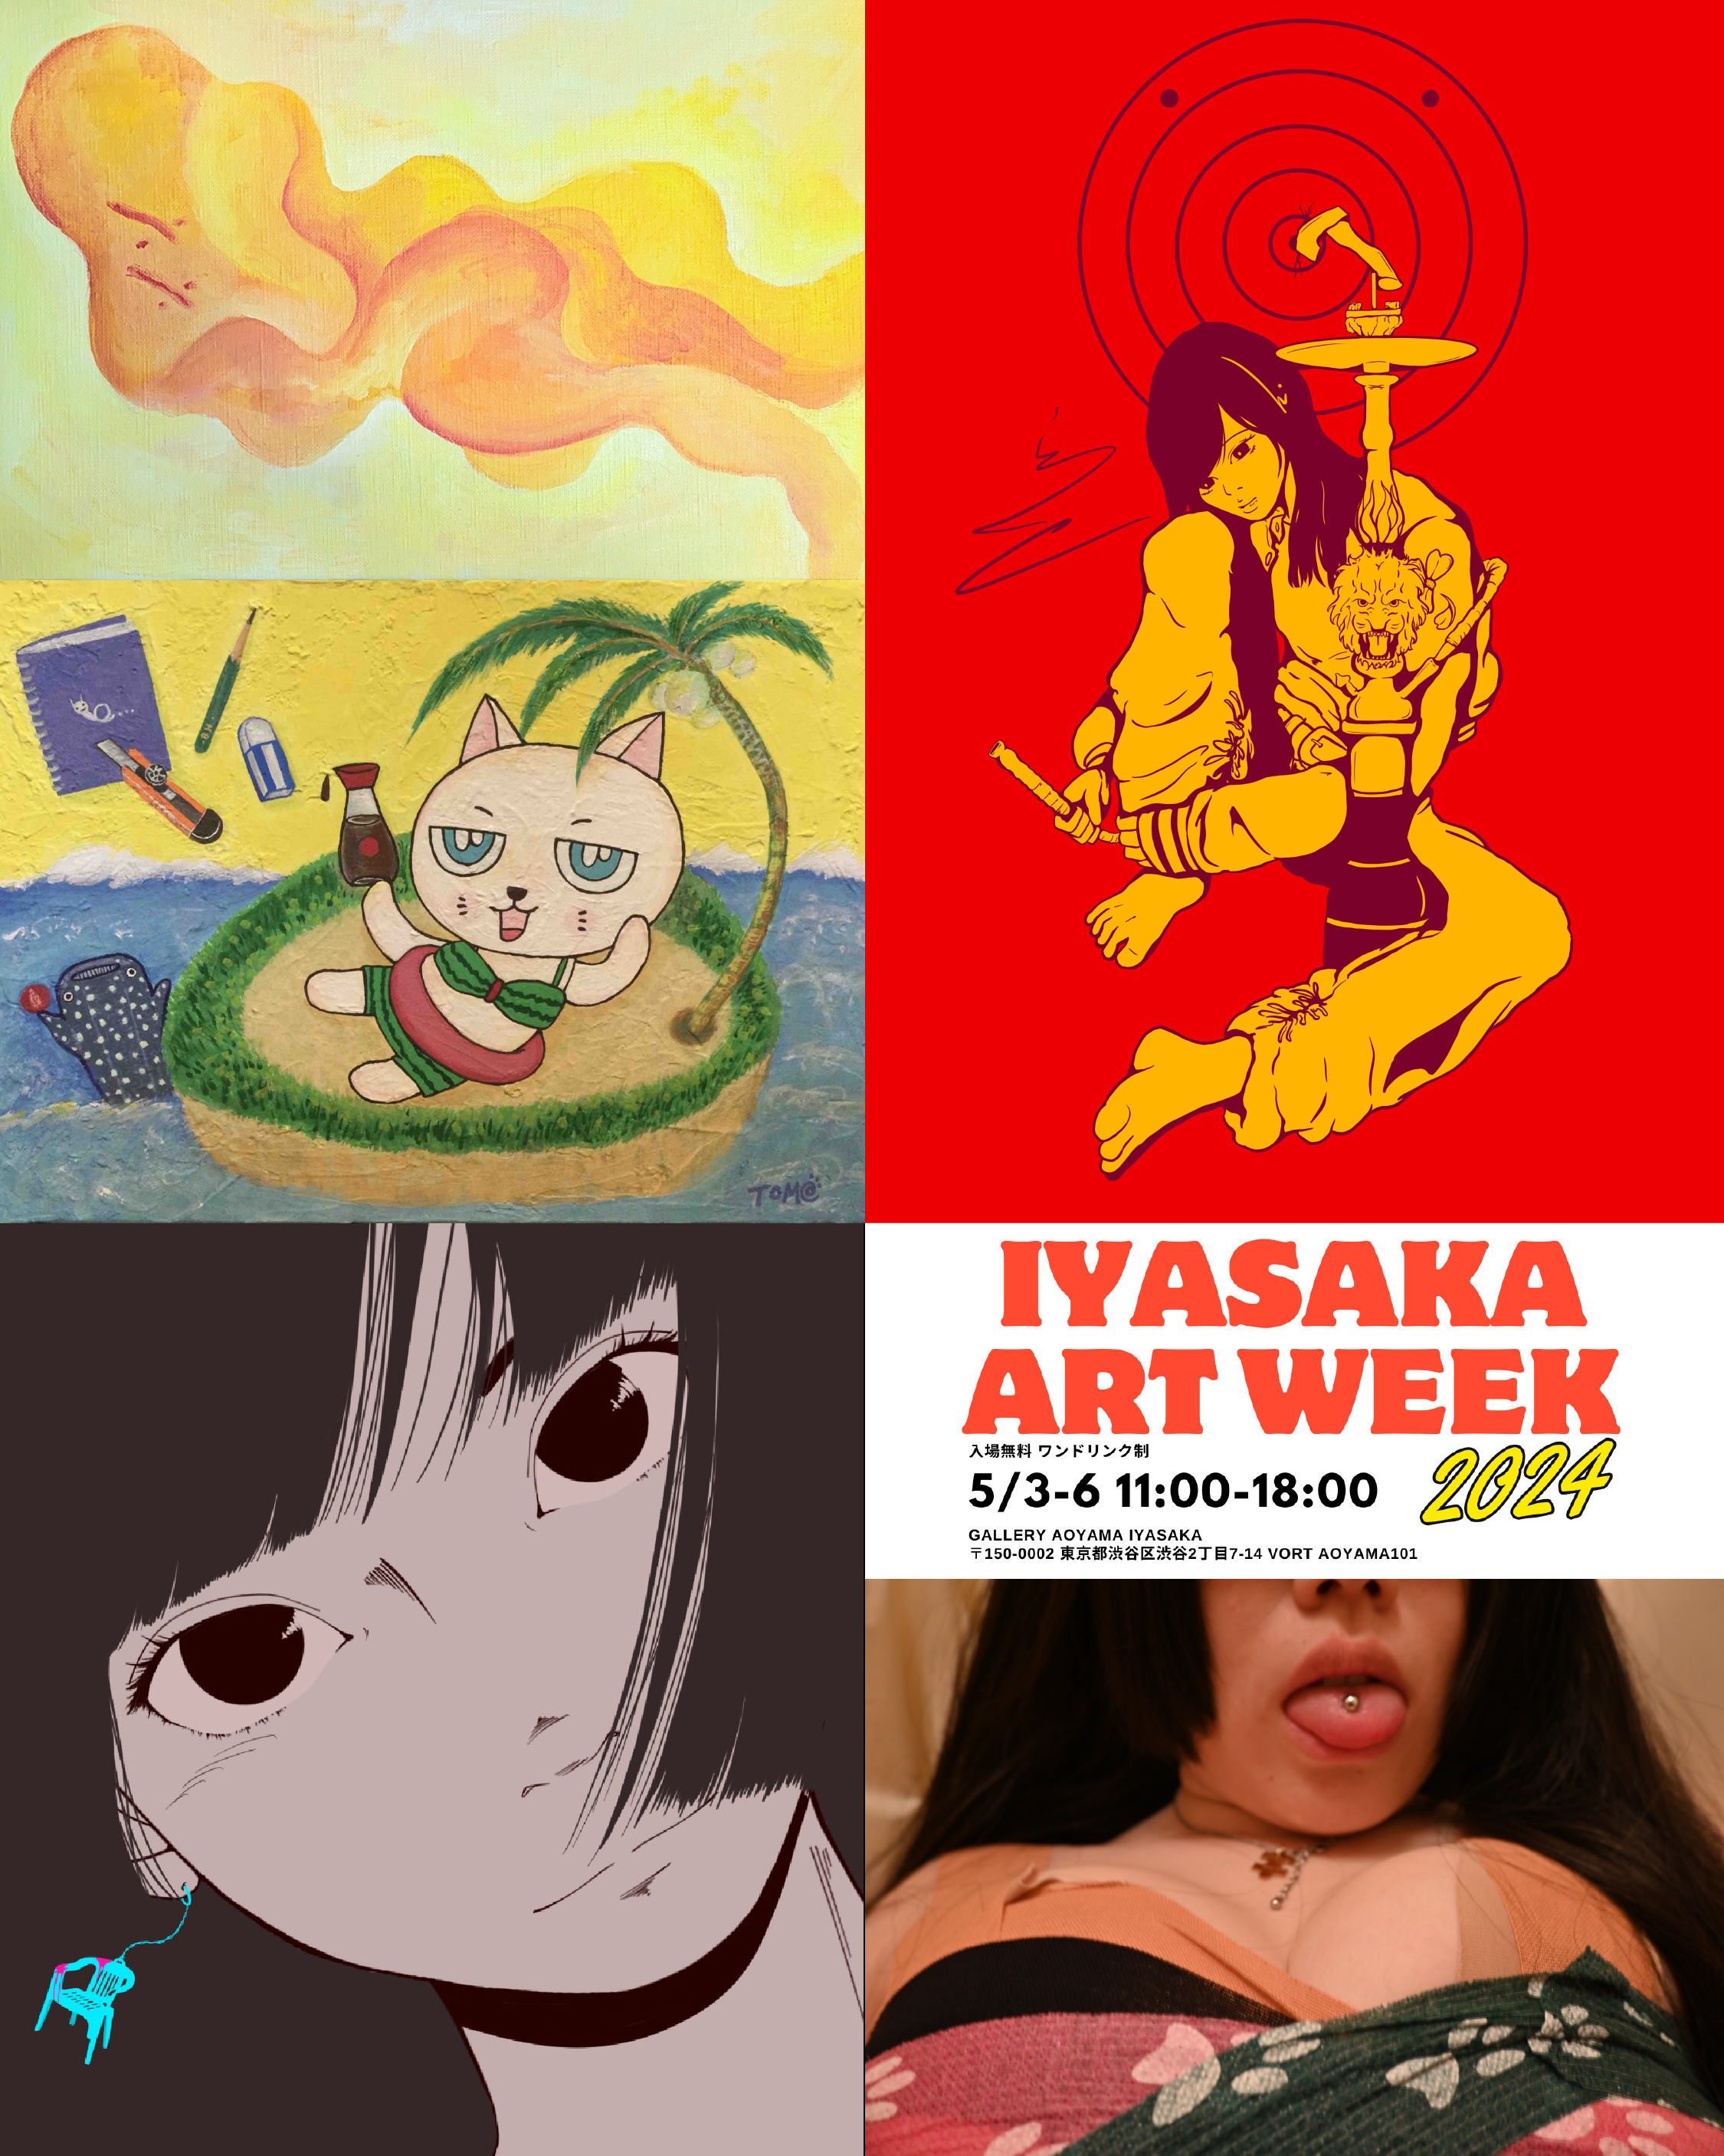 IYASAKA ART WEEK